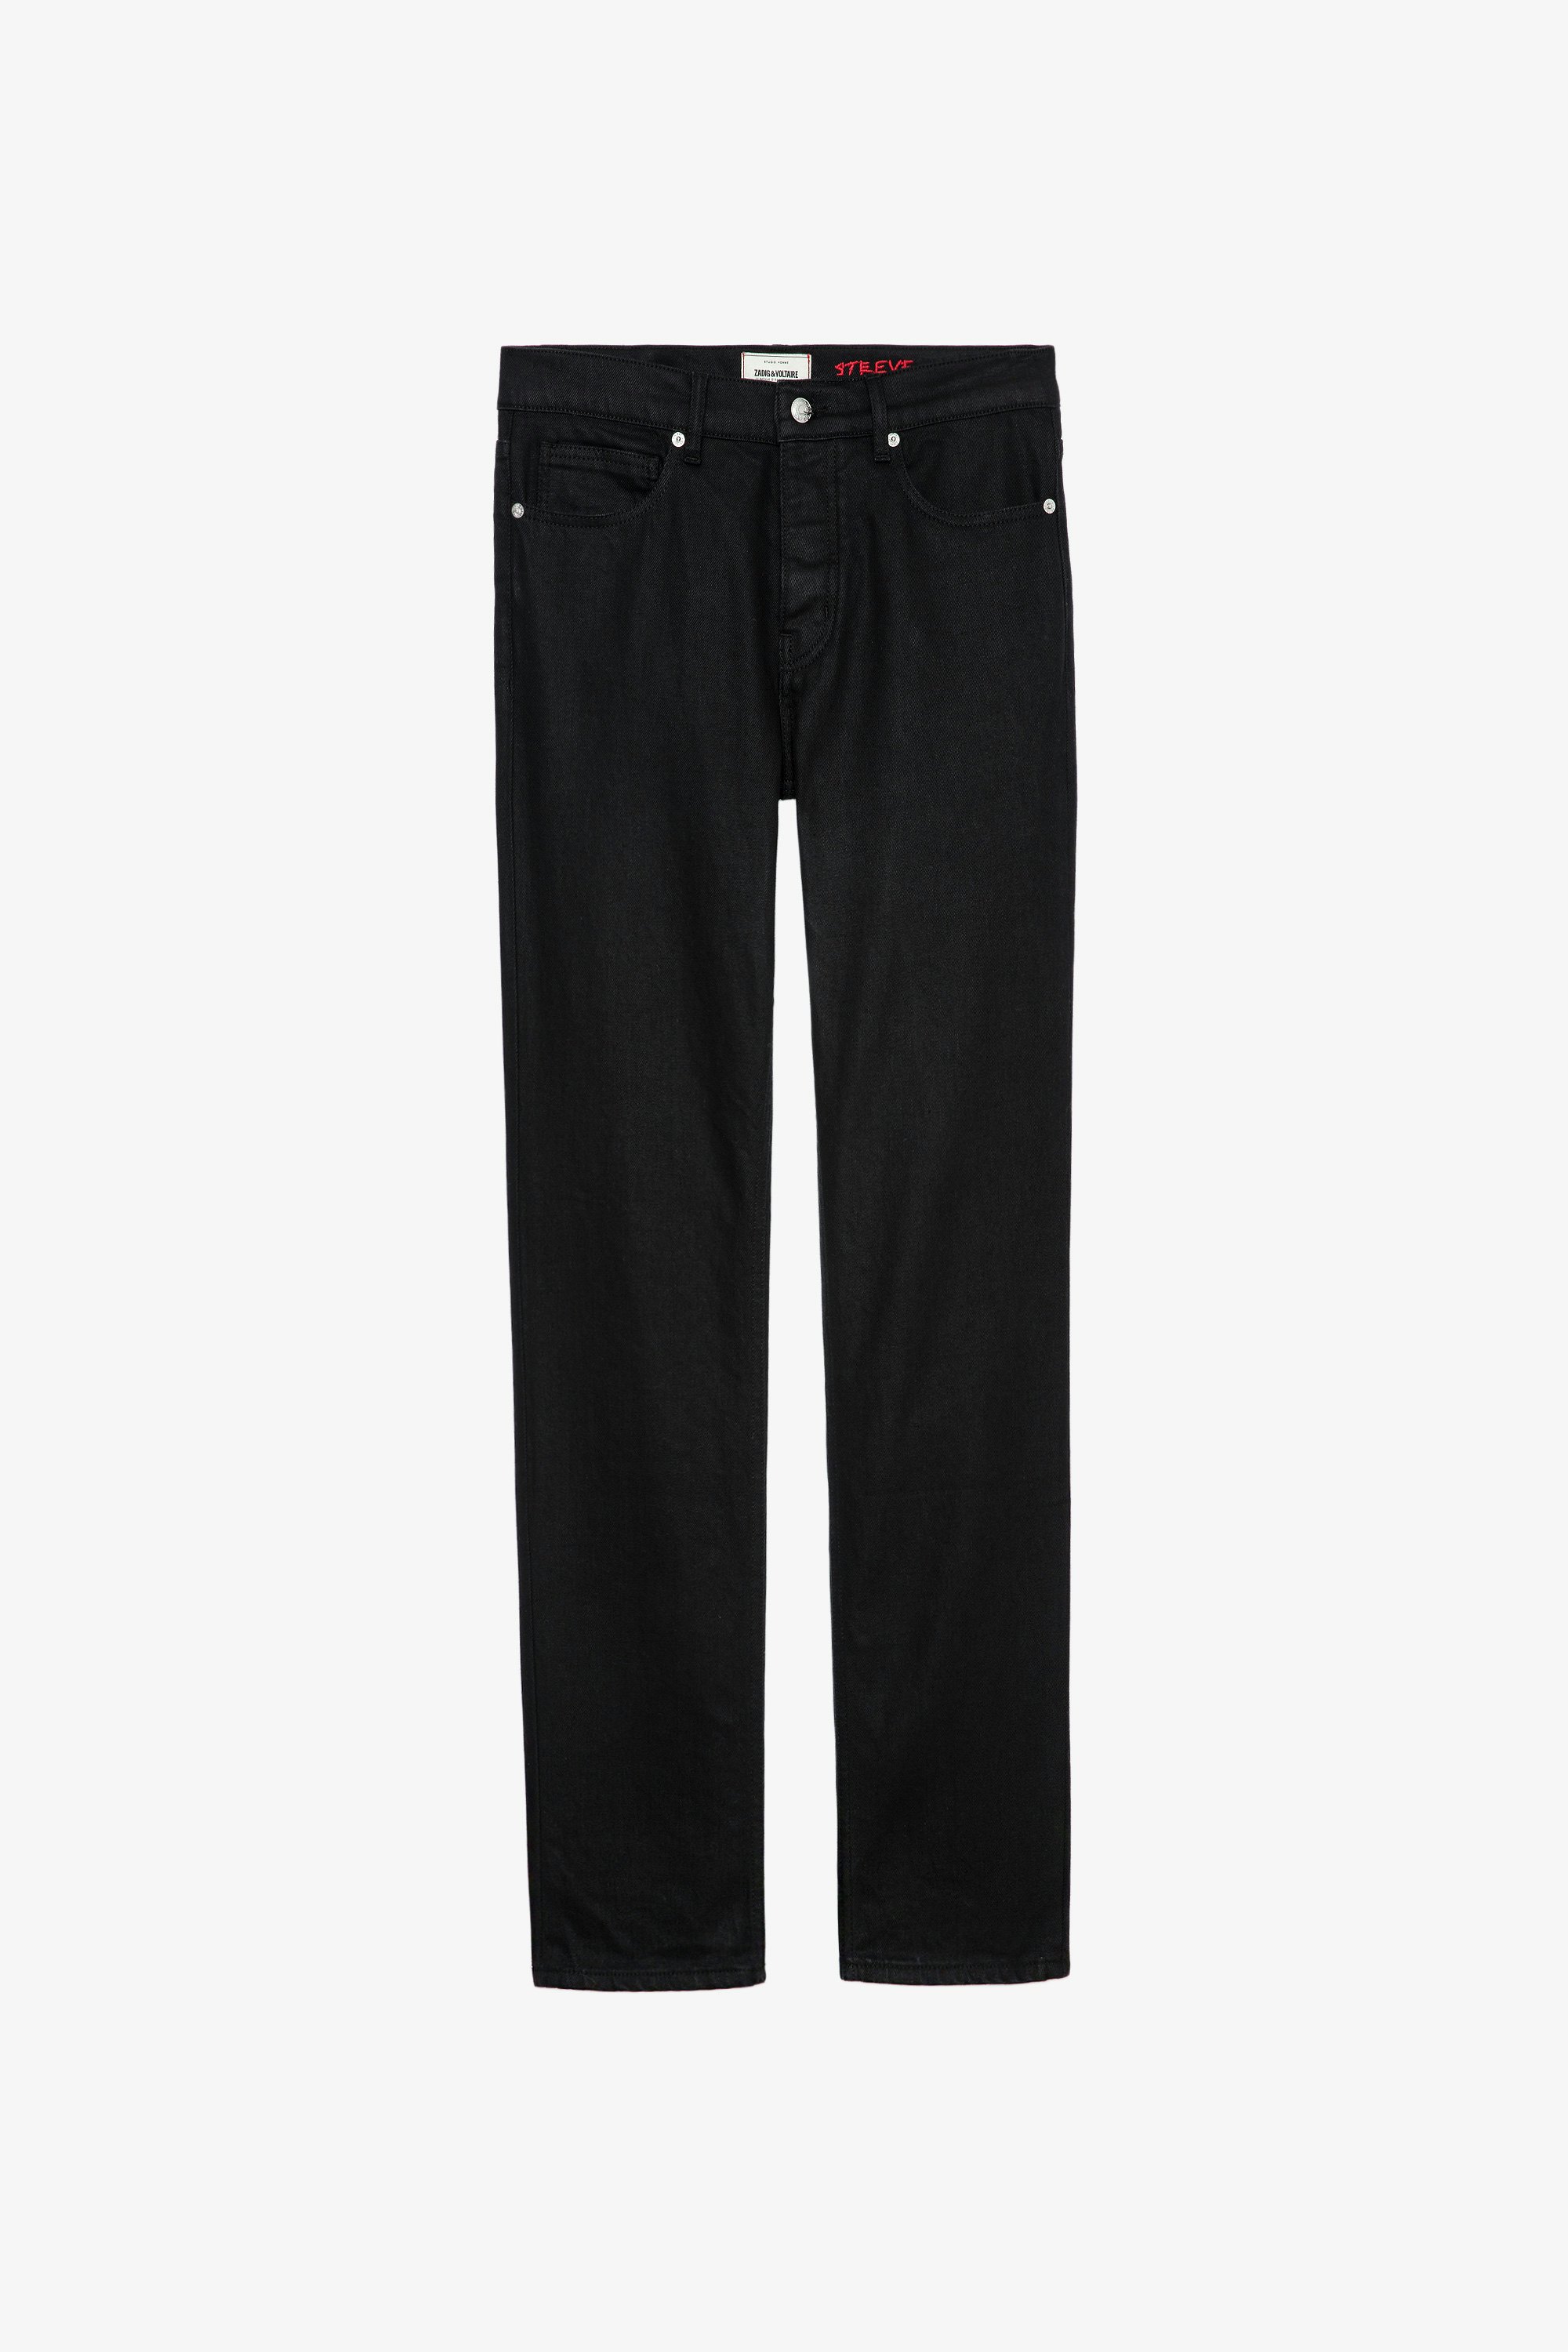 Steeve Jeans - Men’s regular-fit black denim jeans